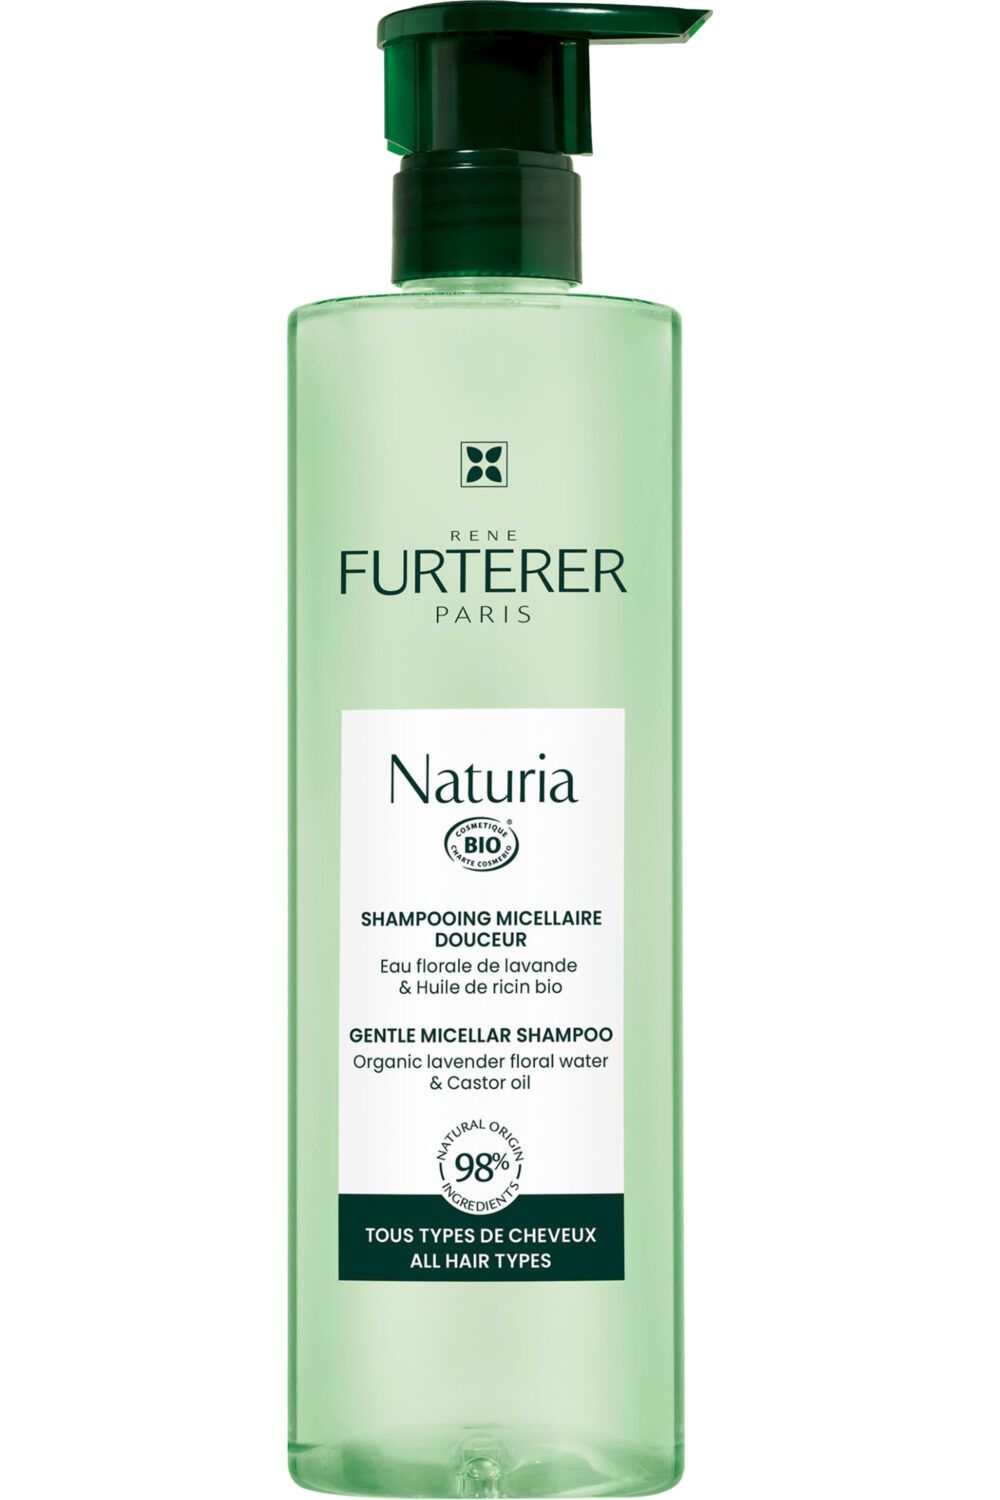 René Furterer - Shampoing micellaire rechargeable ultra doux sans sulfates Naturia 400ml